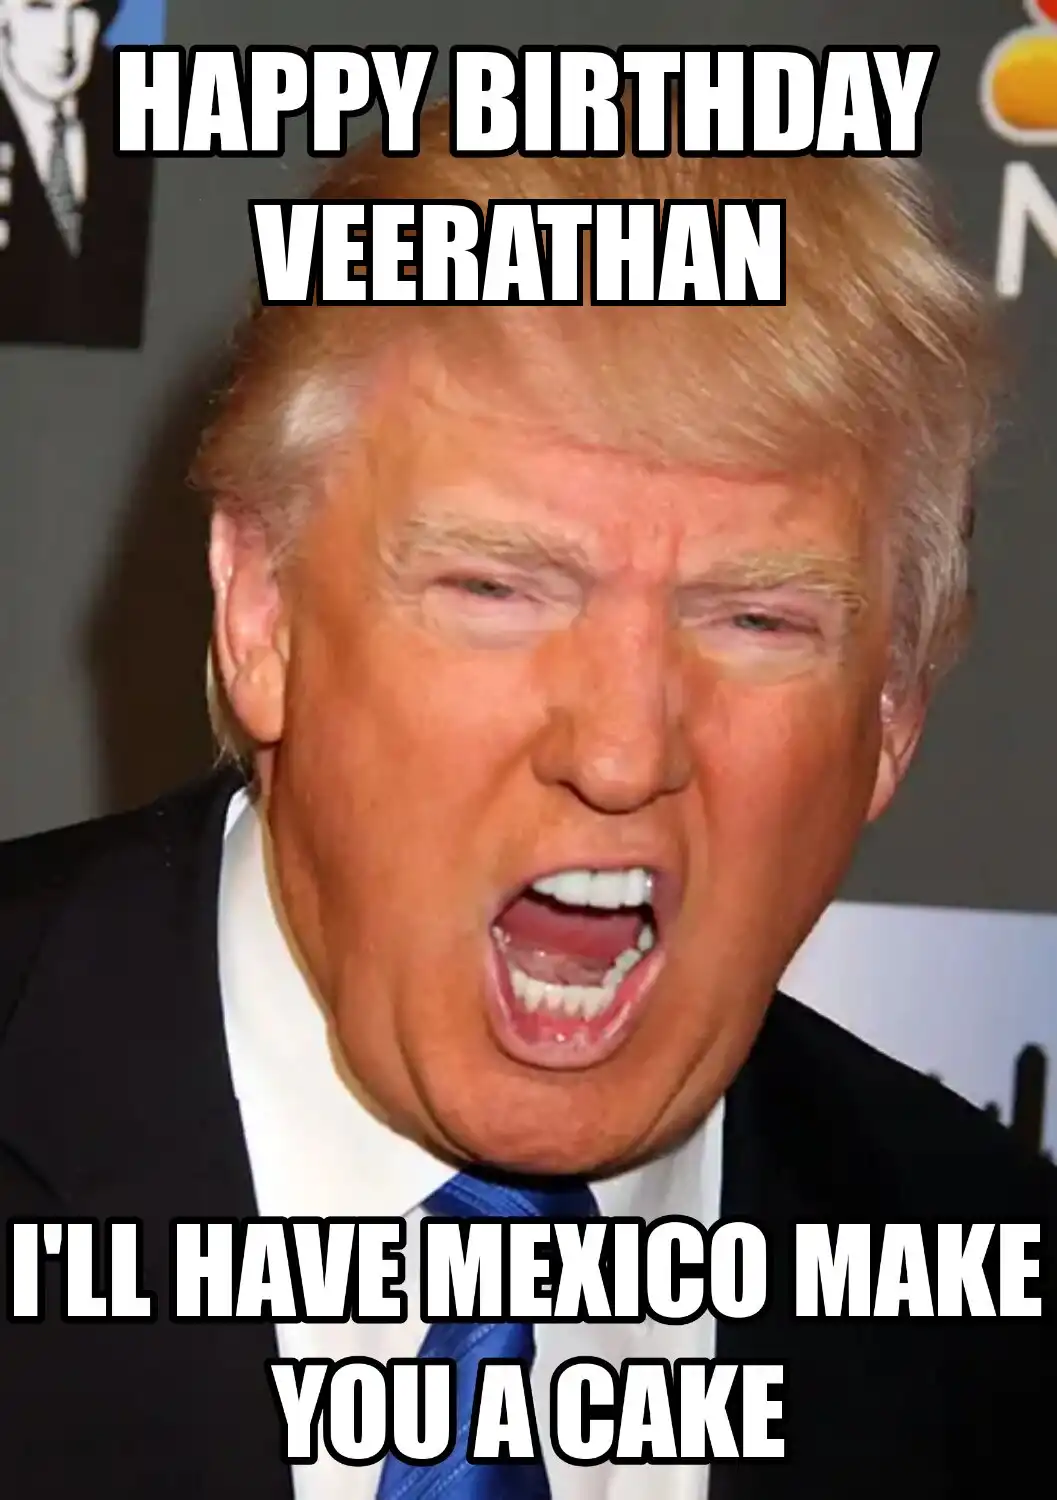 Happy Birthday Veerathan Mexico Make You A Cake Meme